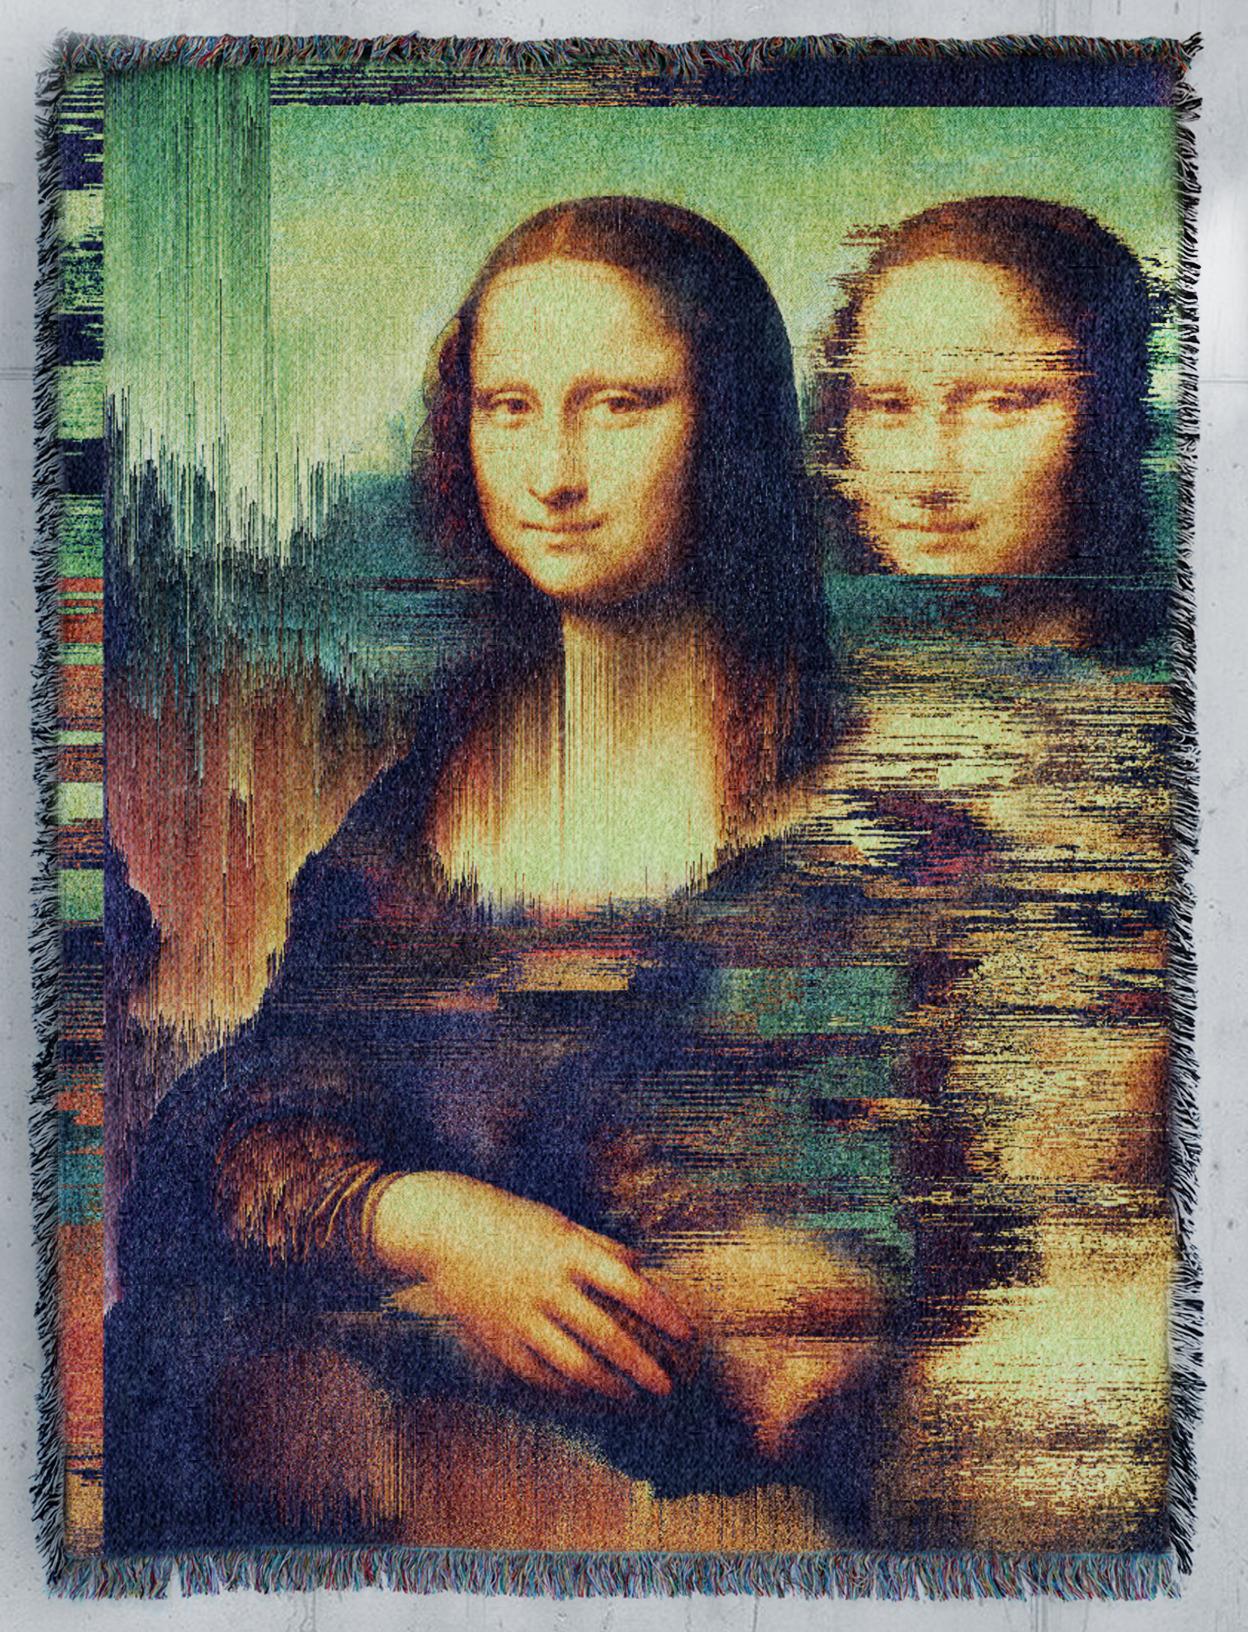 Memories of “La gioconda” by Leonardo Da Vinci by Marco Salvi - Print by Unknown